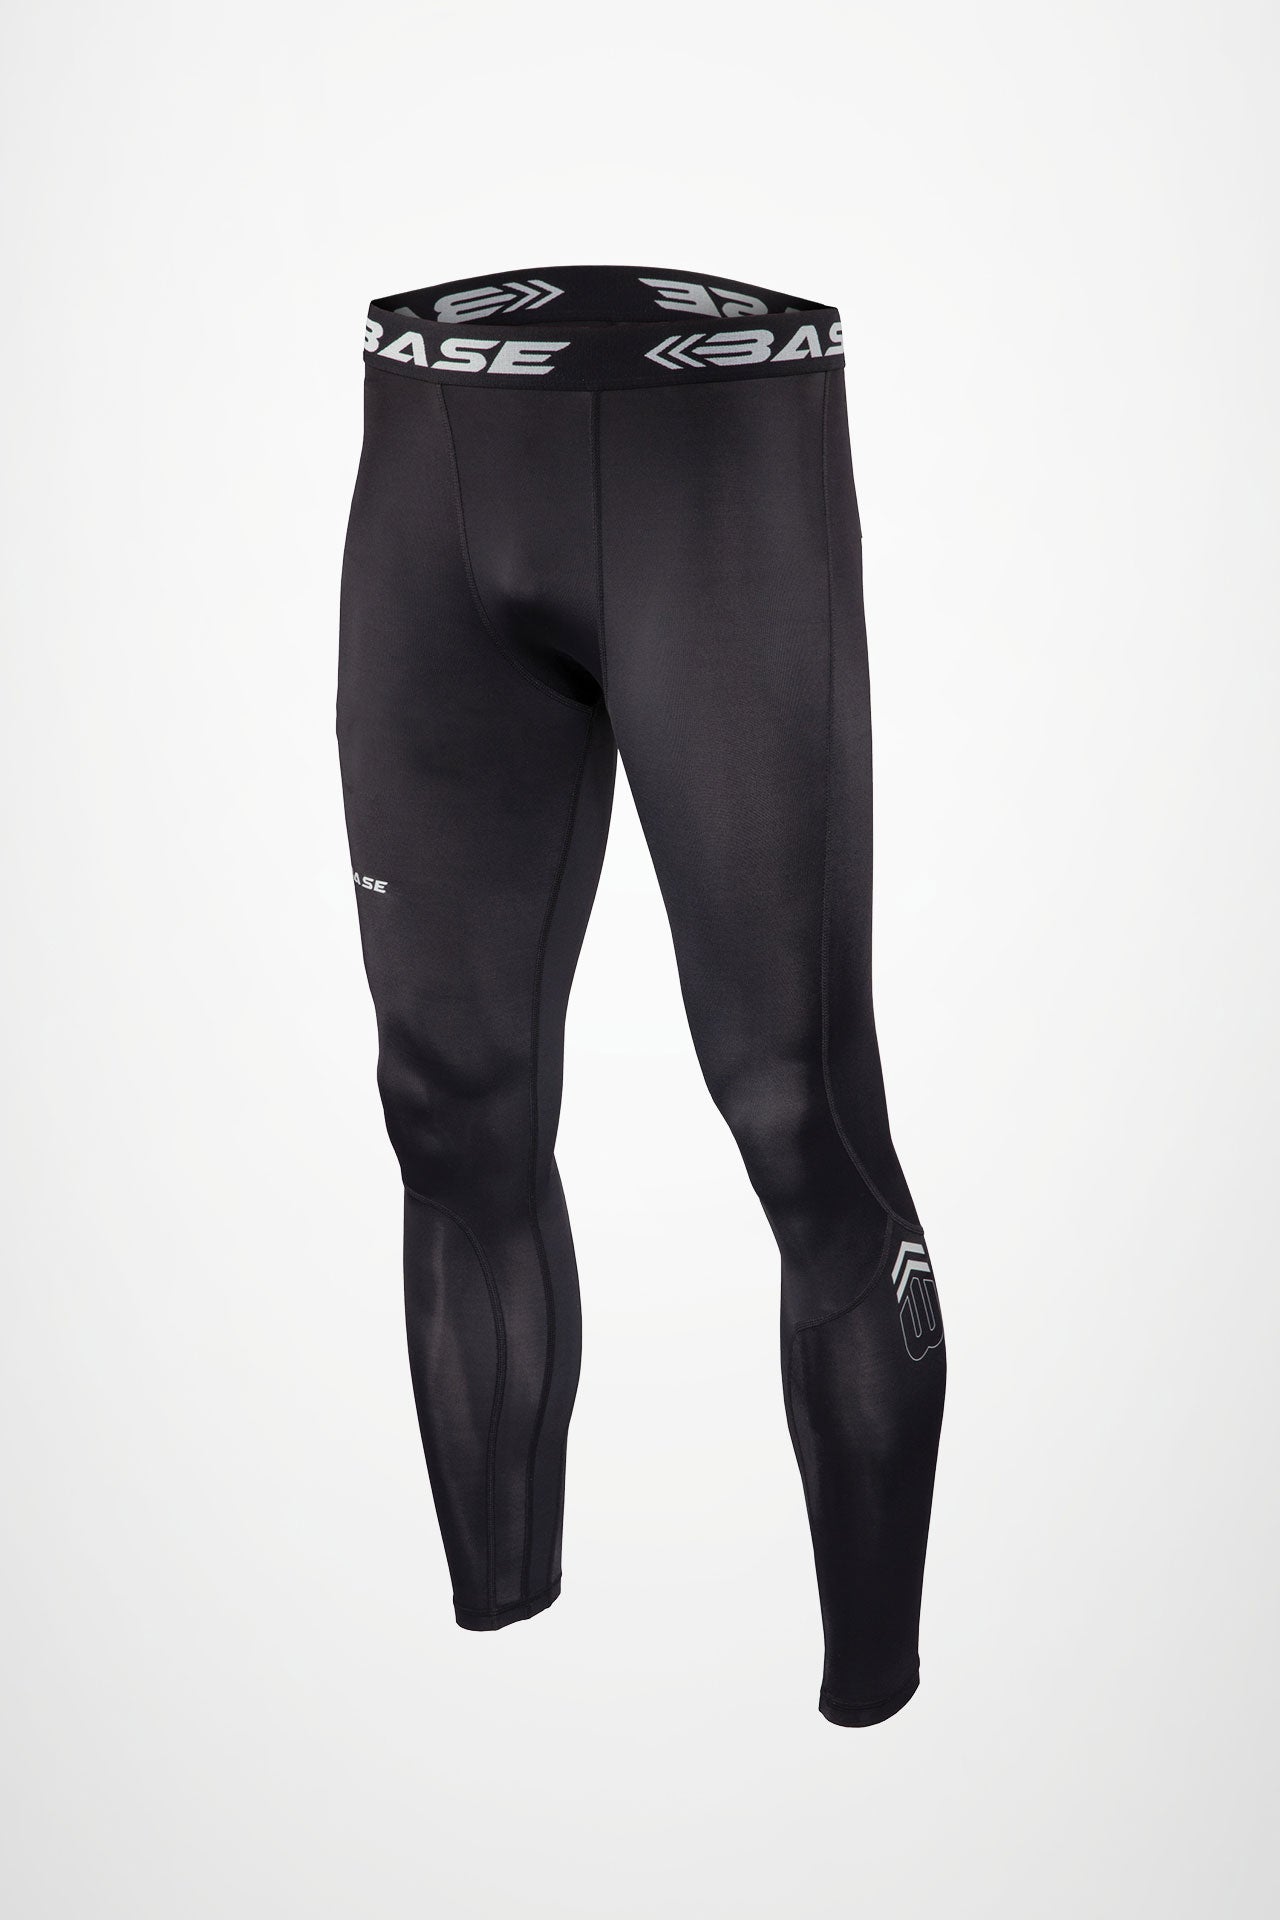 Jonscart Men's 3/4 One Leg Compression Capri Tights Pants Athletic Base  Layer Underwear Black-l Large